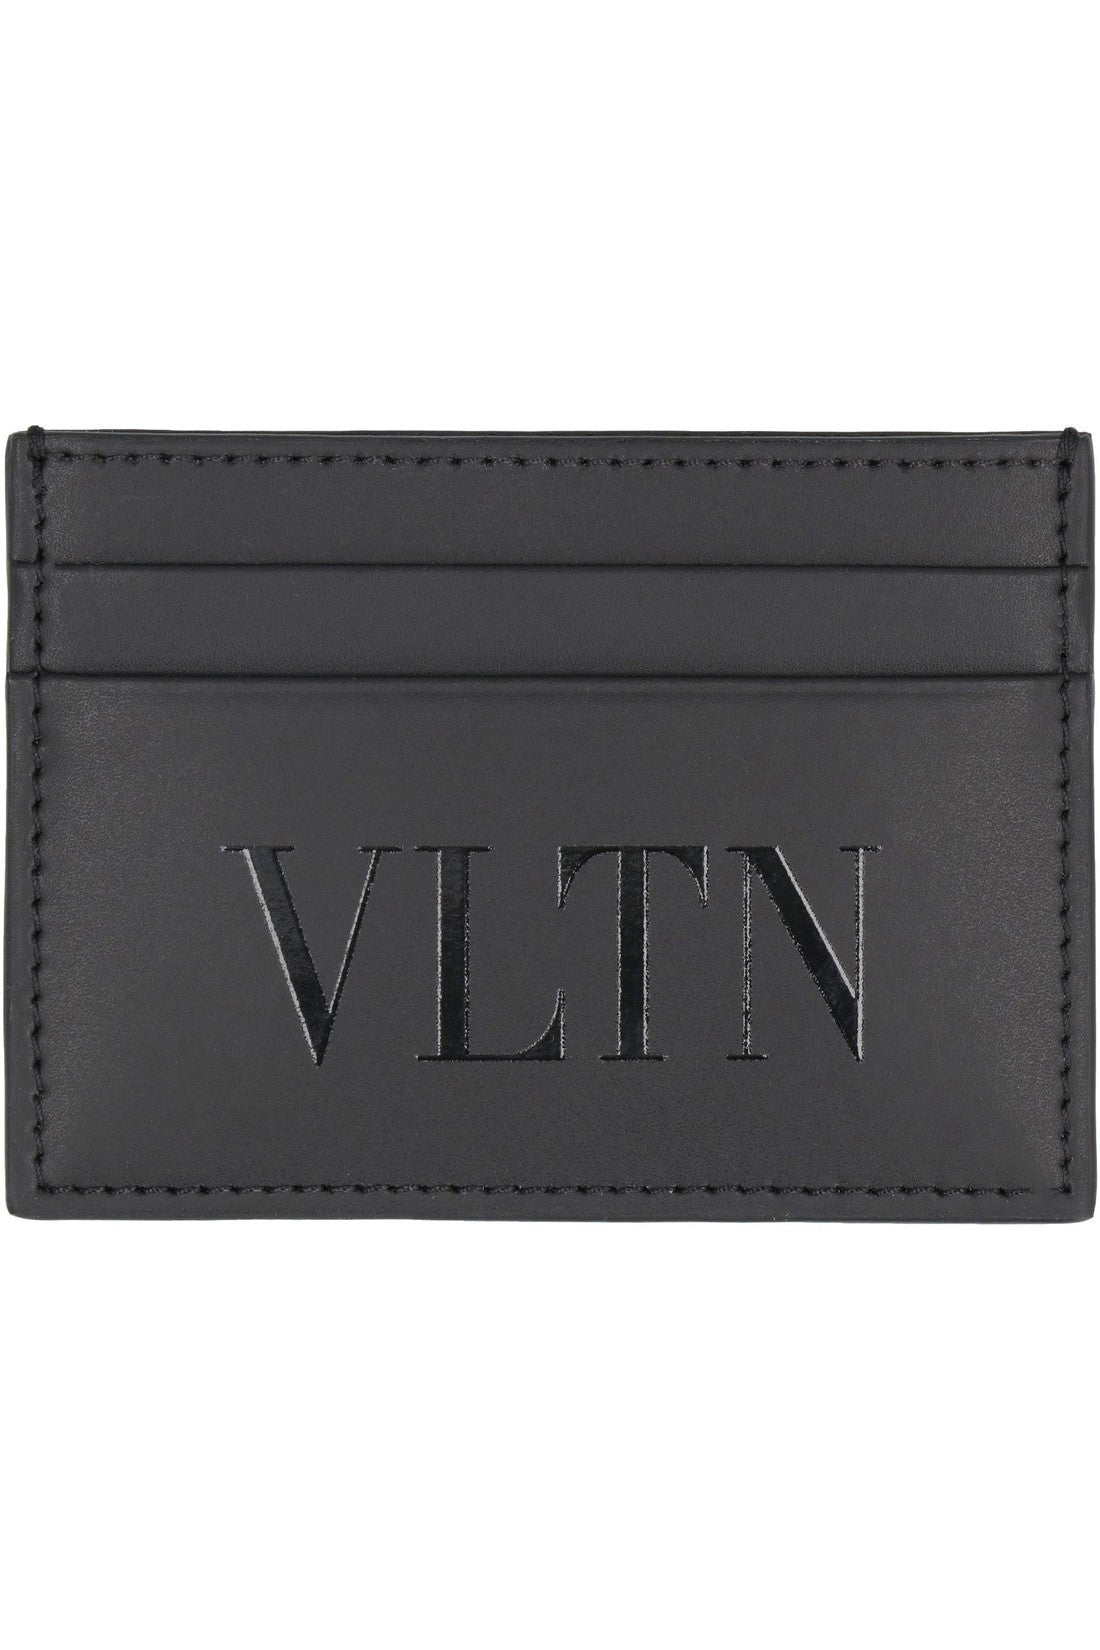 Valentino-OUTLET-SALE-Valentino Gravani - Leather card holder-ARCHIVIST